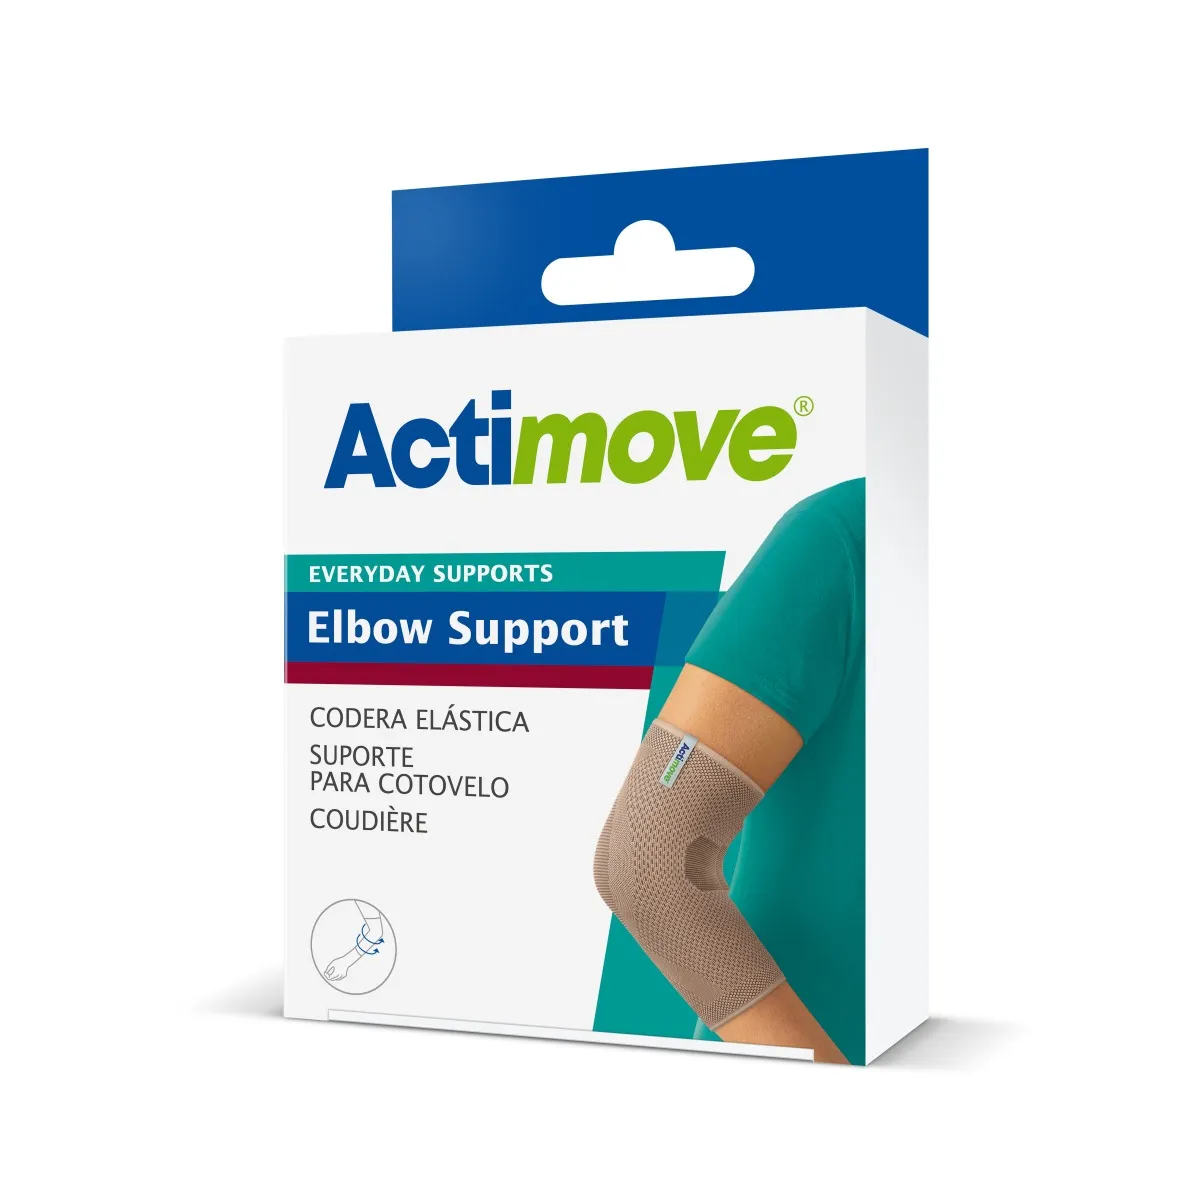 Actimove® Everyday Supports opaska na łokieć beżowa rozmiar S, 1 szt.